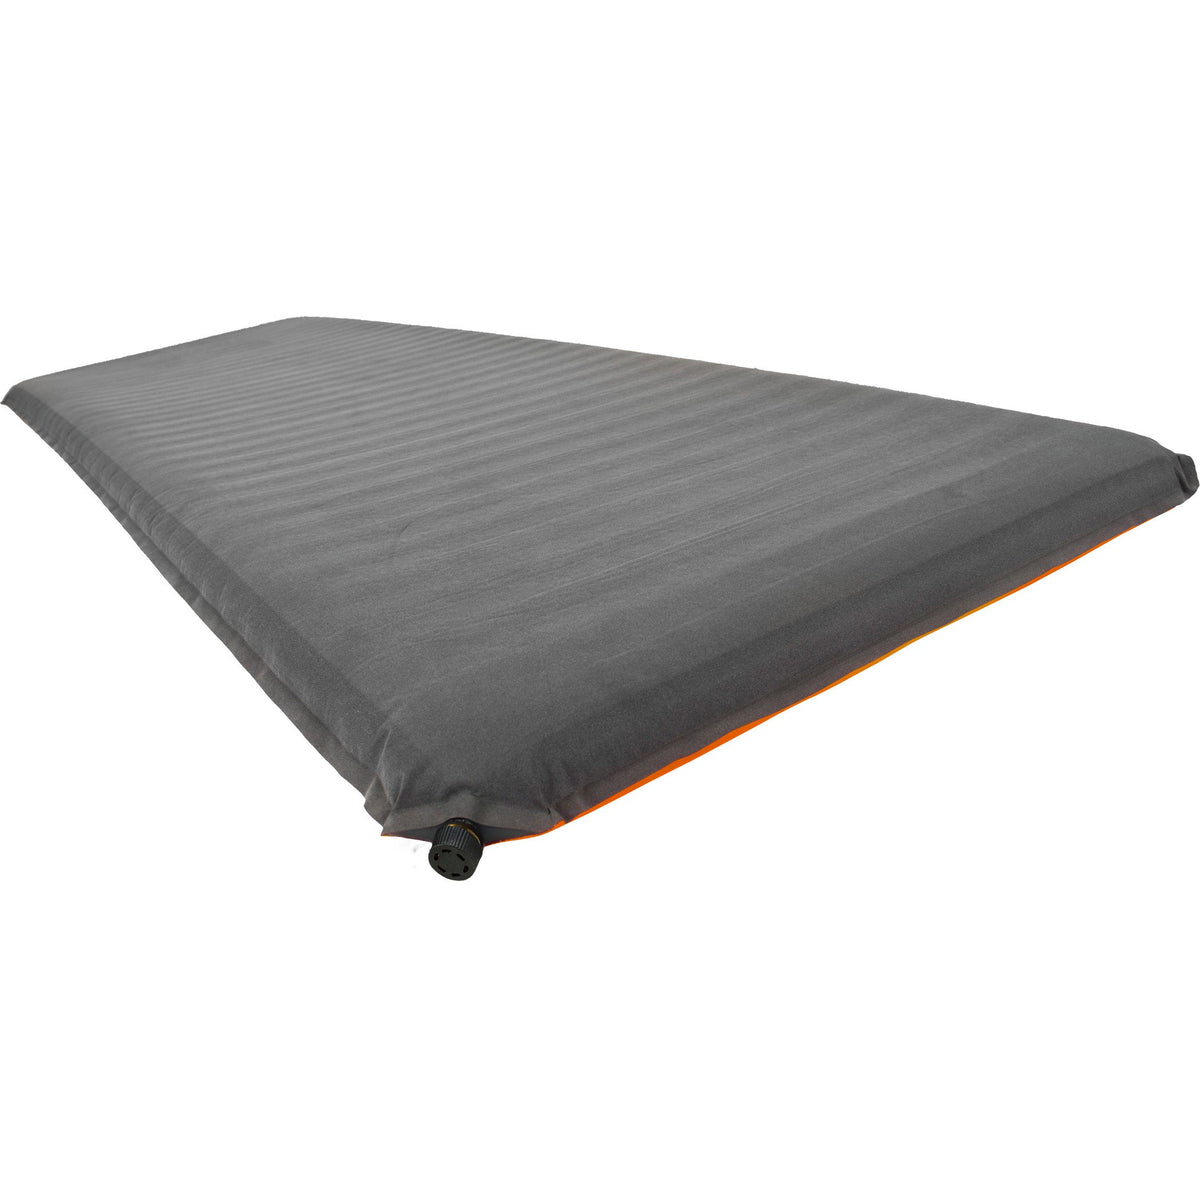 TETON Sports ComfortLite™ Regular Self-Inflating Sleeping Pad with Velcro 1041A